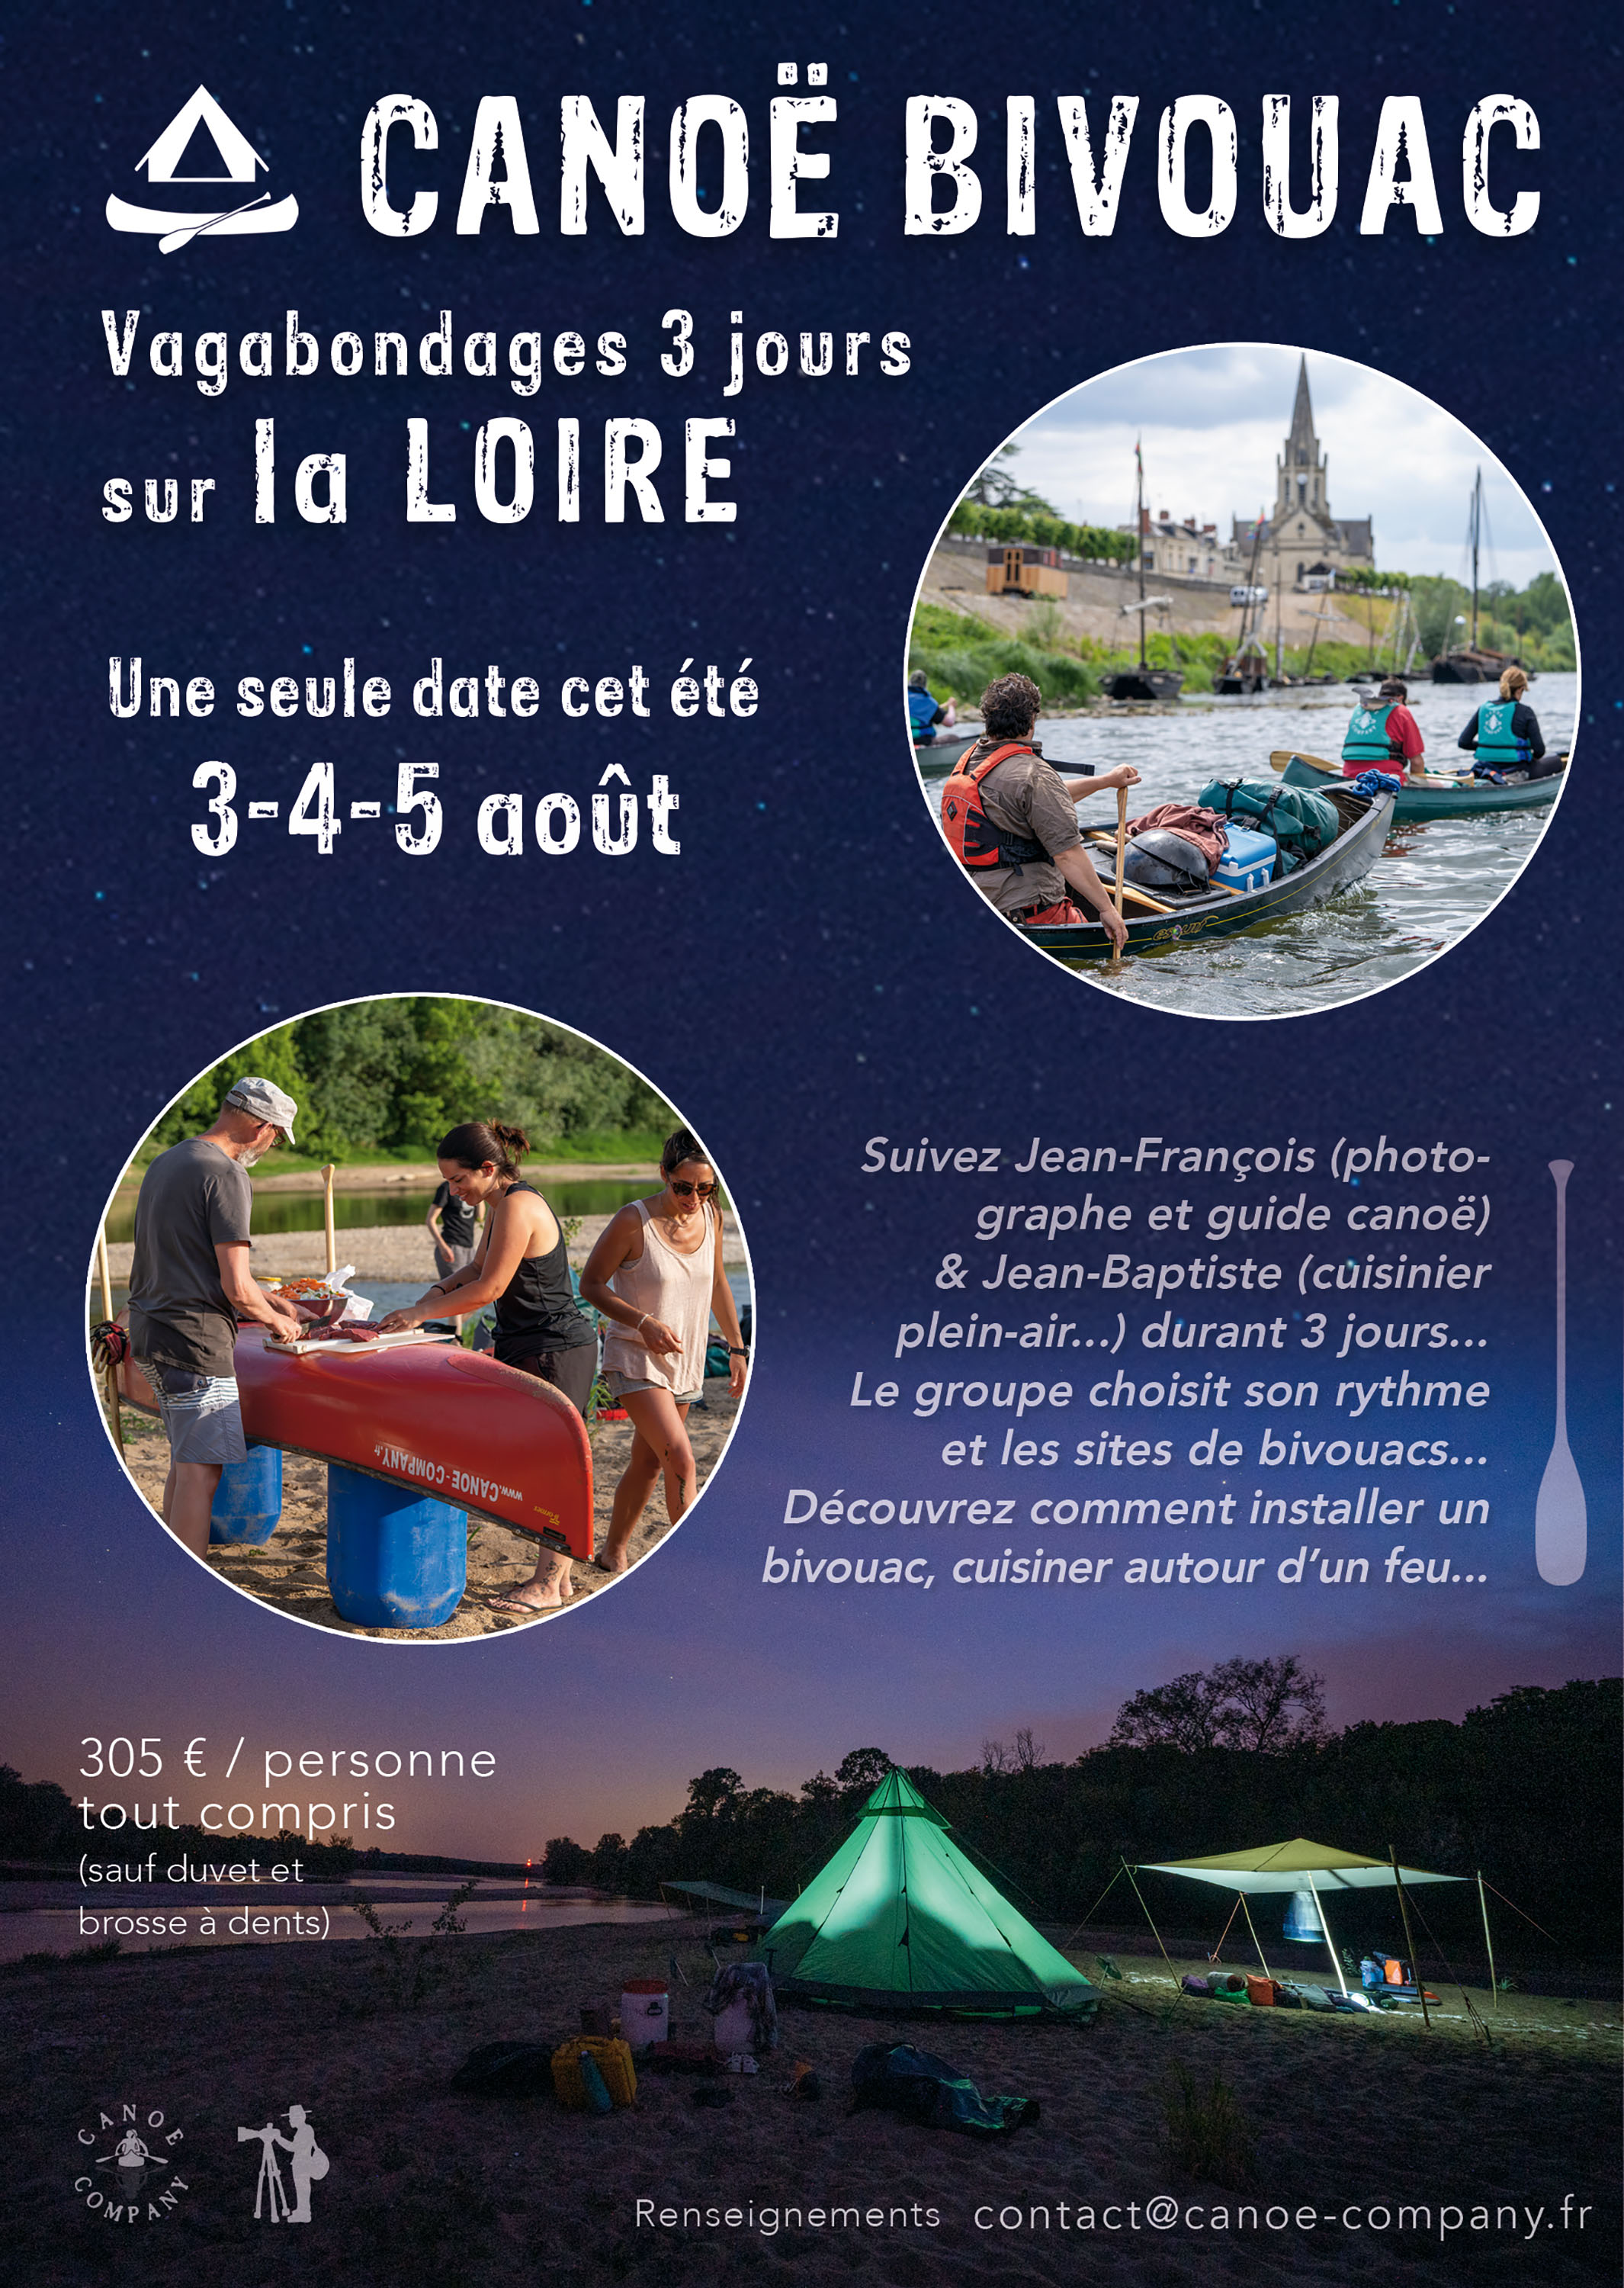 Vagabondage canoe bivouac Loire